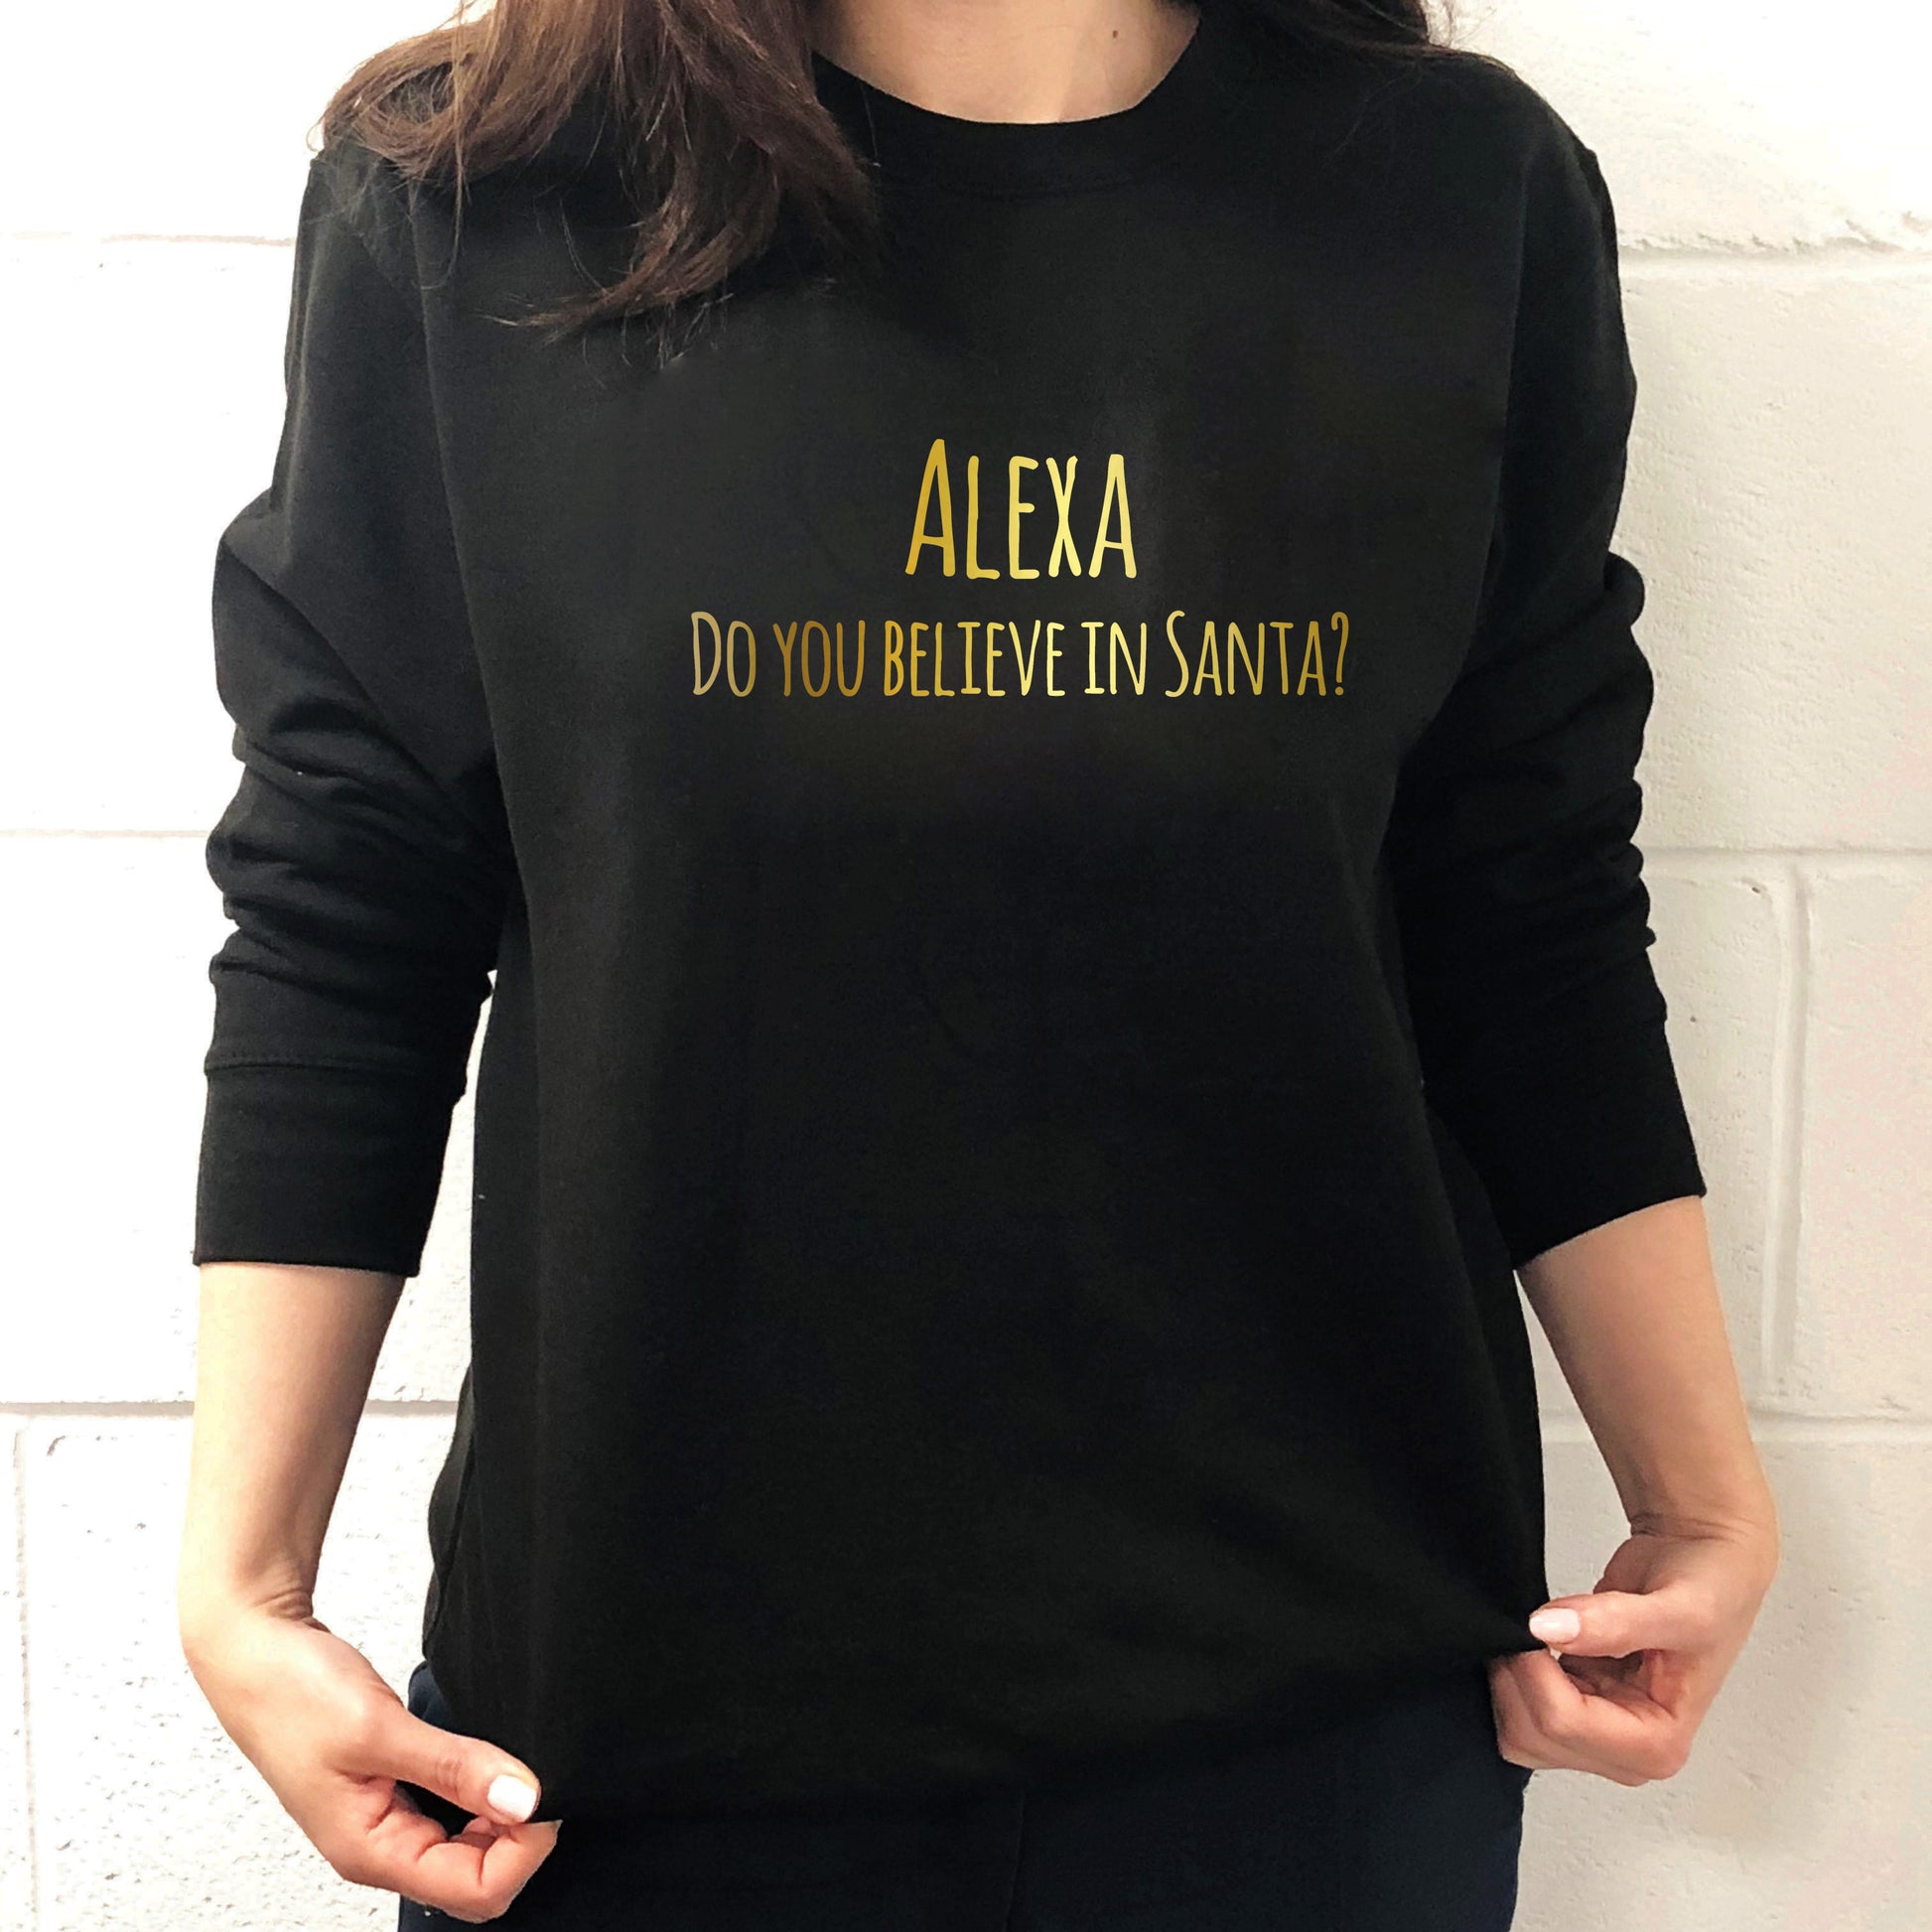 Alexa do you believe in Santa Christmas jumper